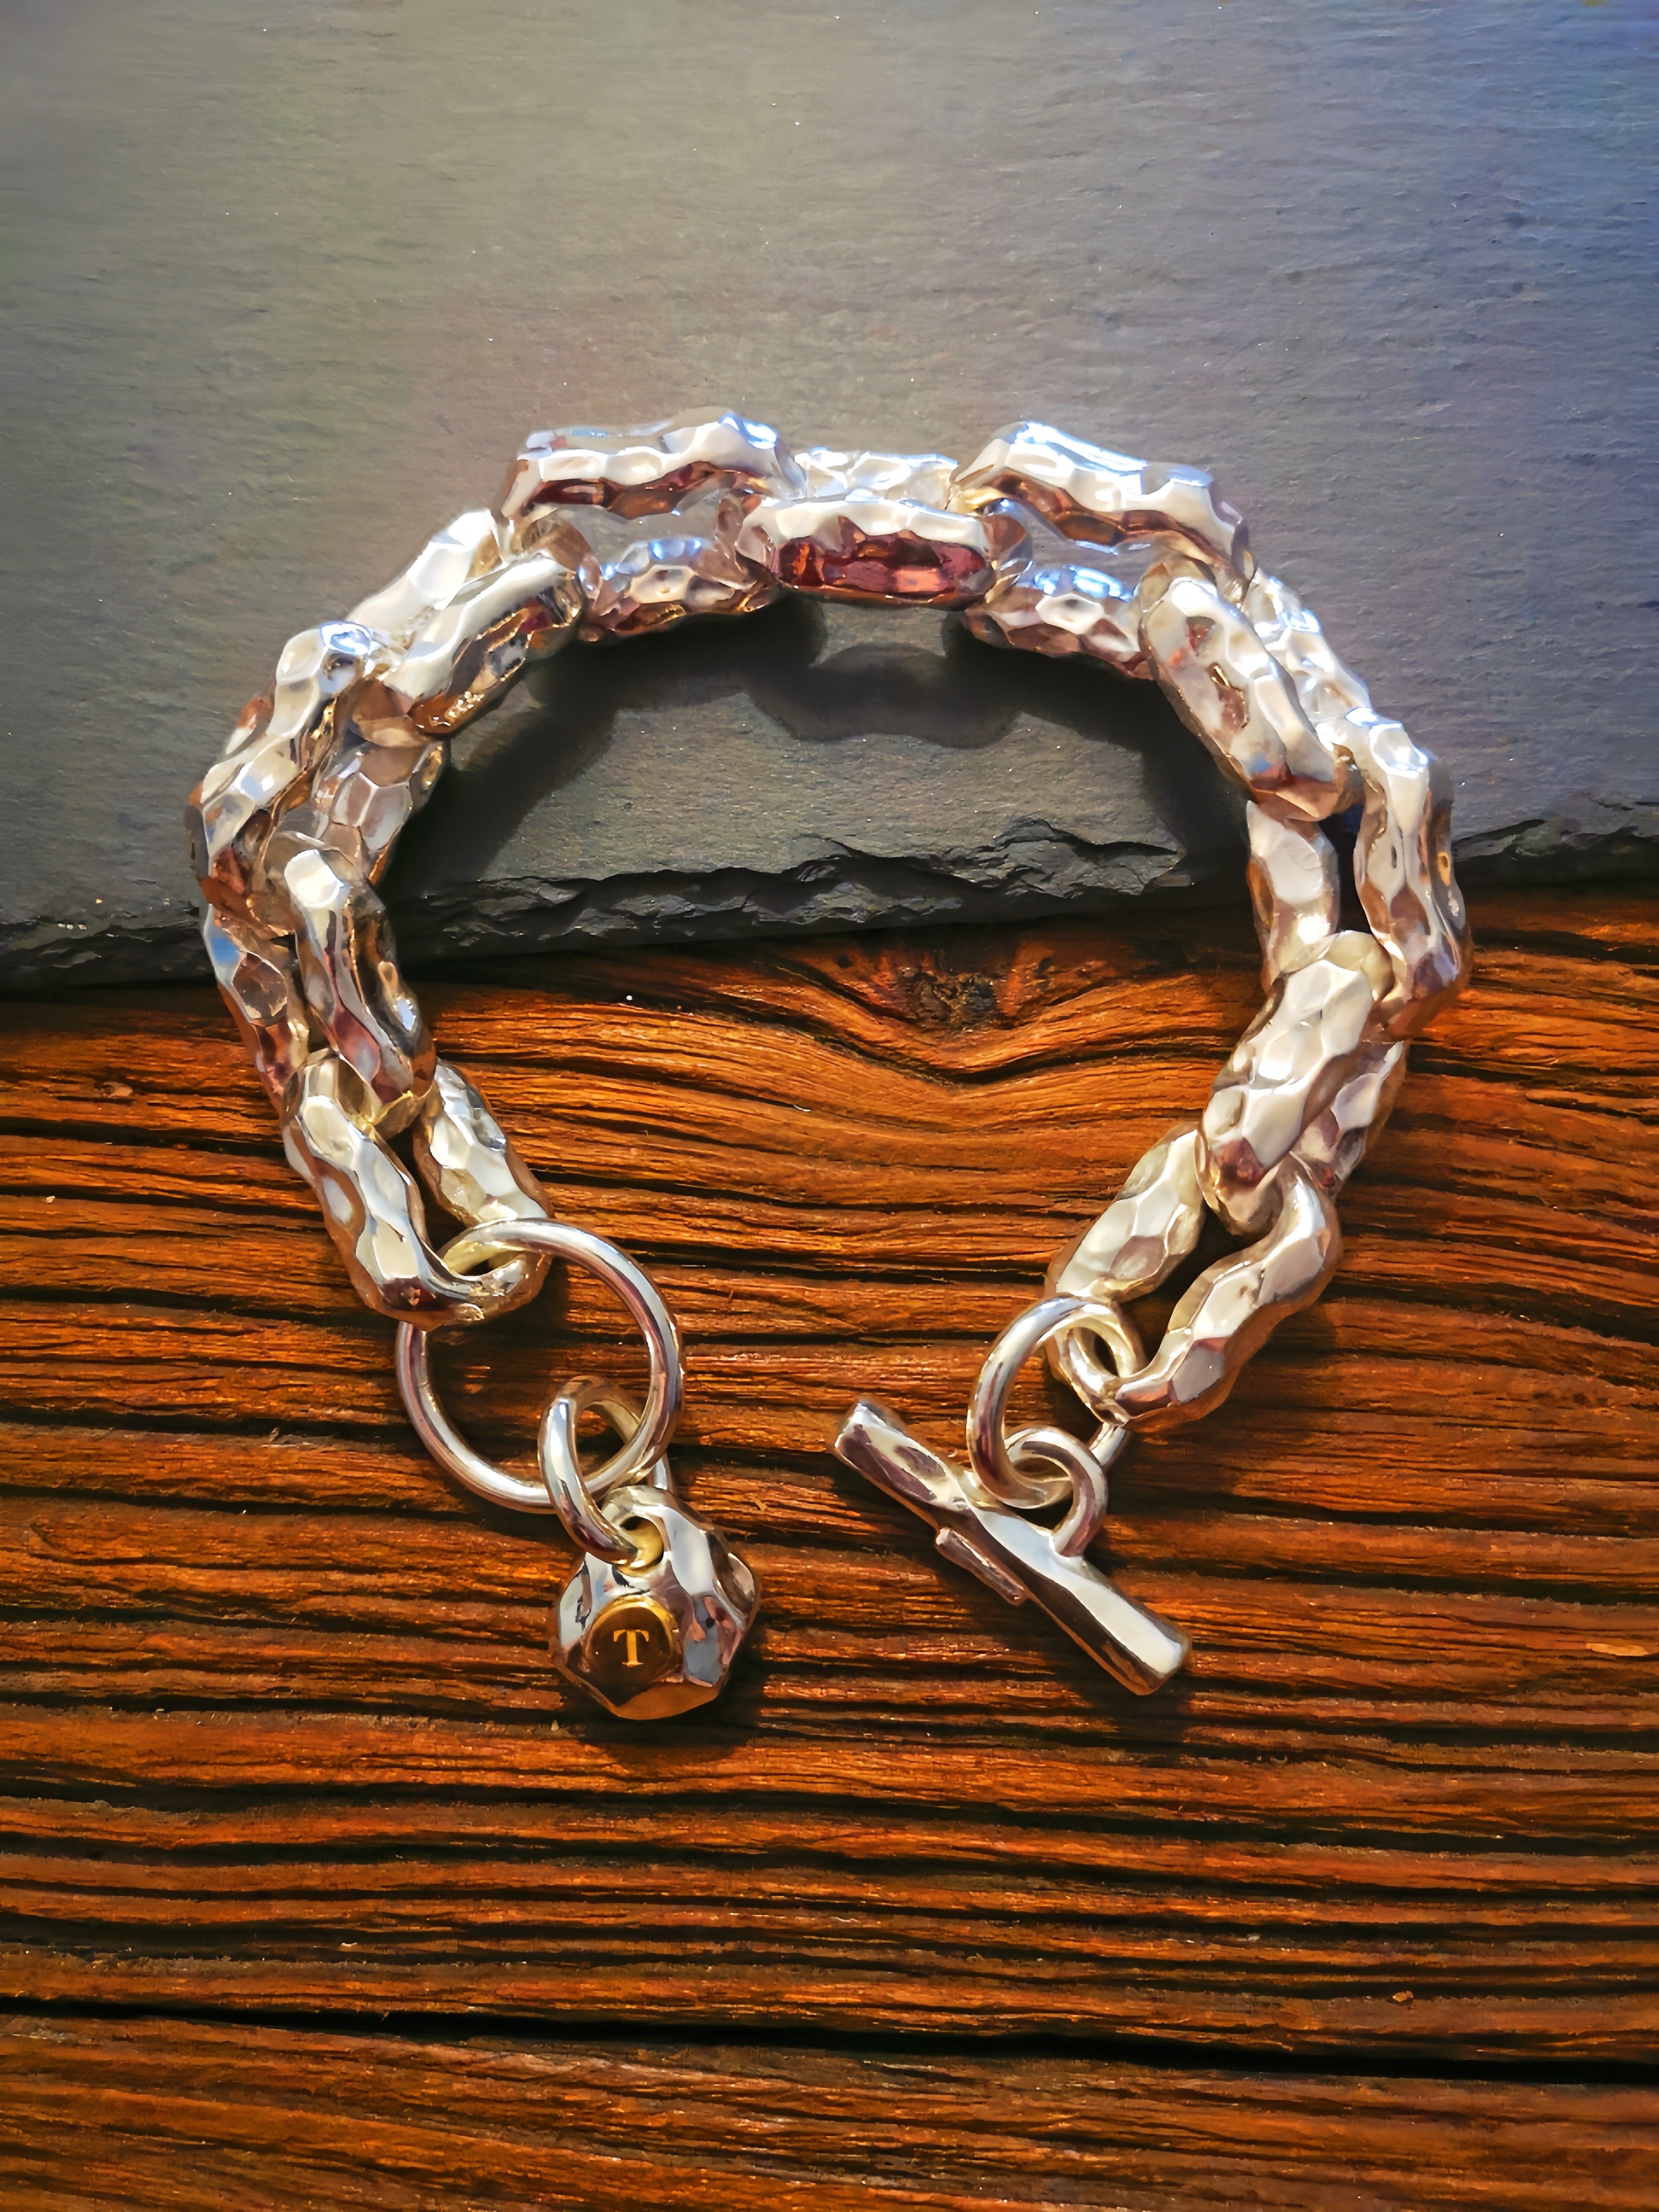 Heavy Metal Hammered Silver Bracelet (Highly Polished) (Item No.B0565)